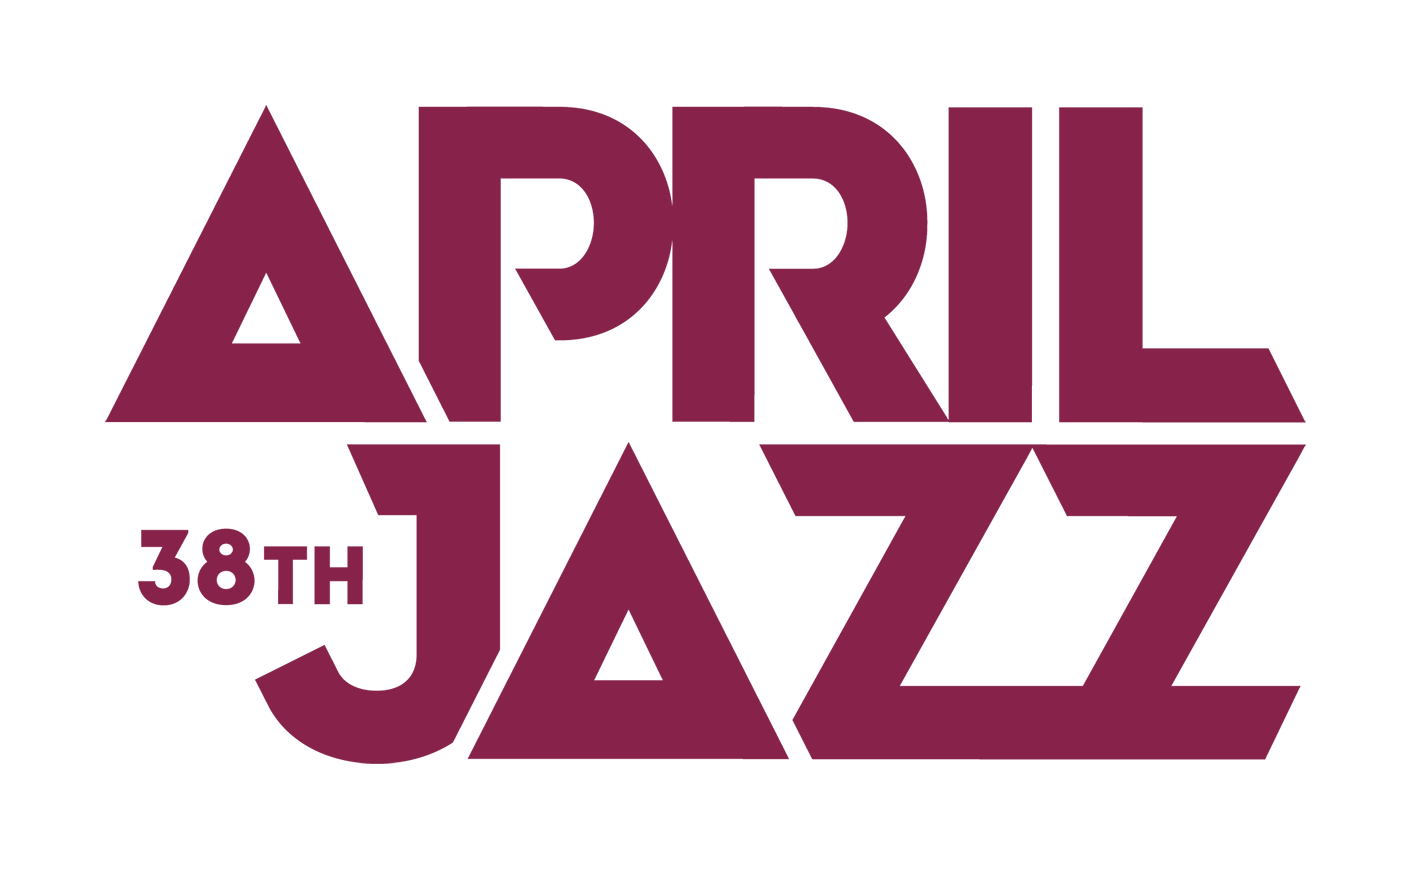 April Jazz